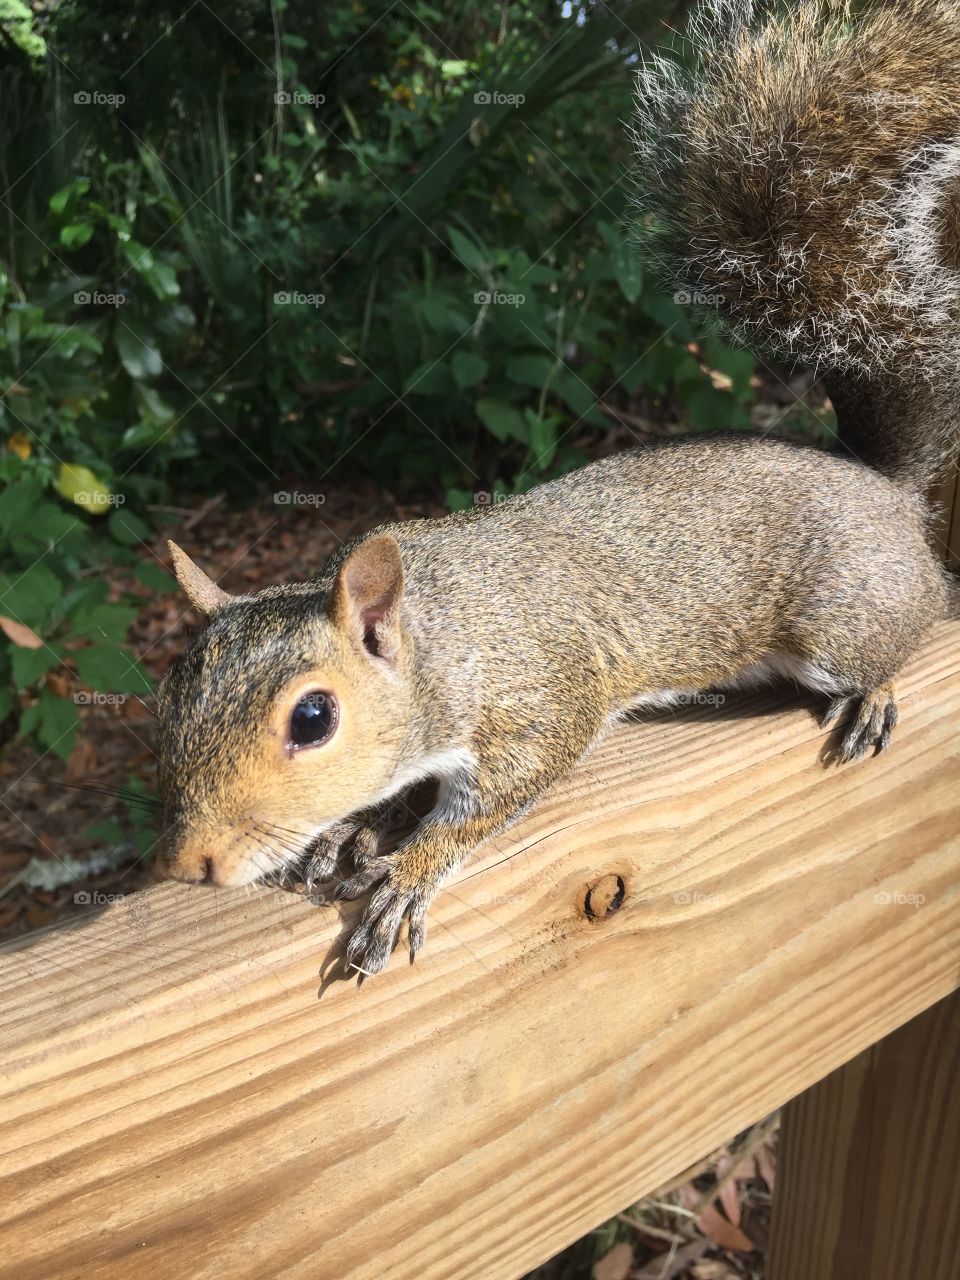 Friendly squirrel @ blue springs state park orange city FL